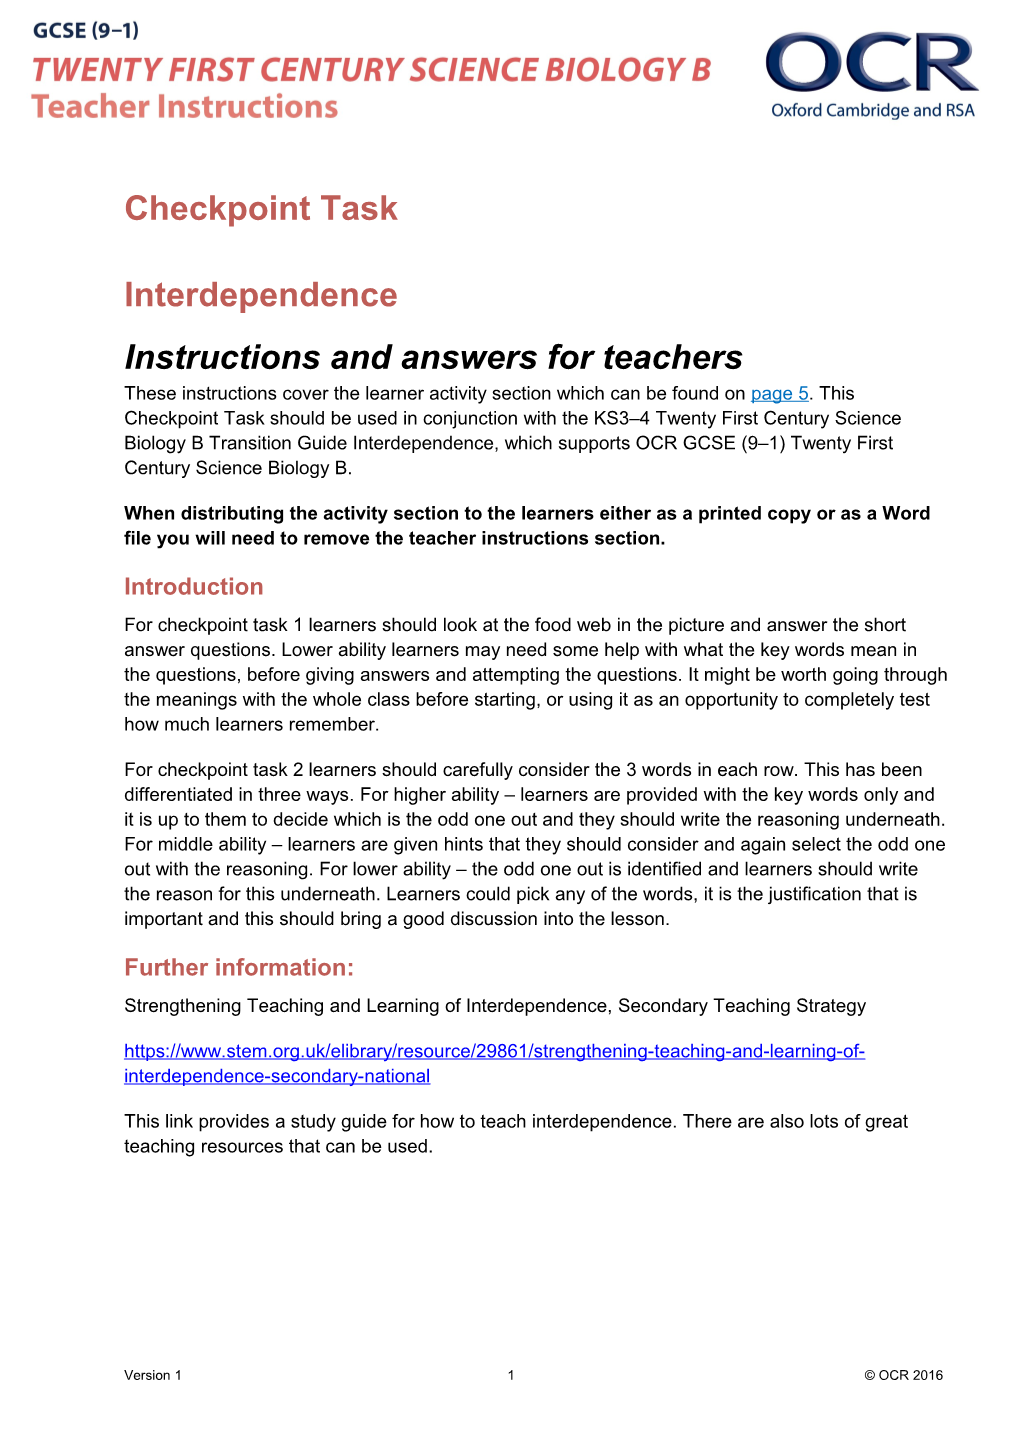 GCSE (9-1) Twenty First Century Science Biology B Checkpoint Task Interdependence